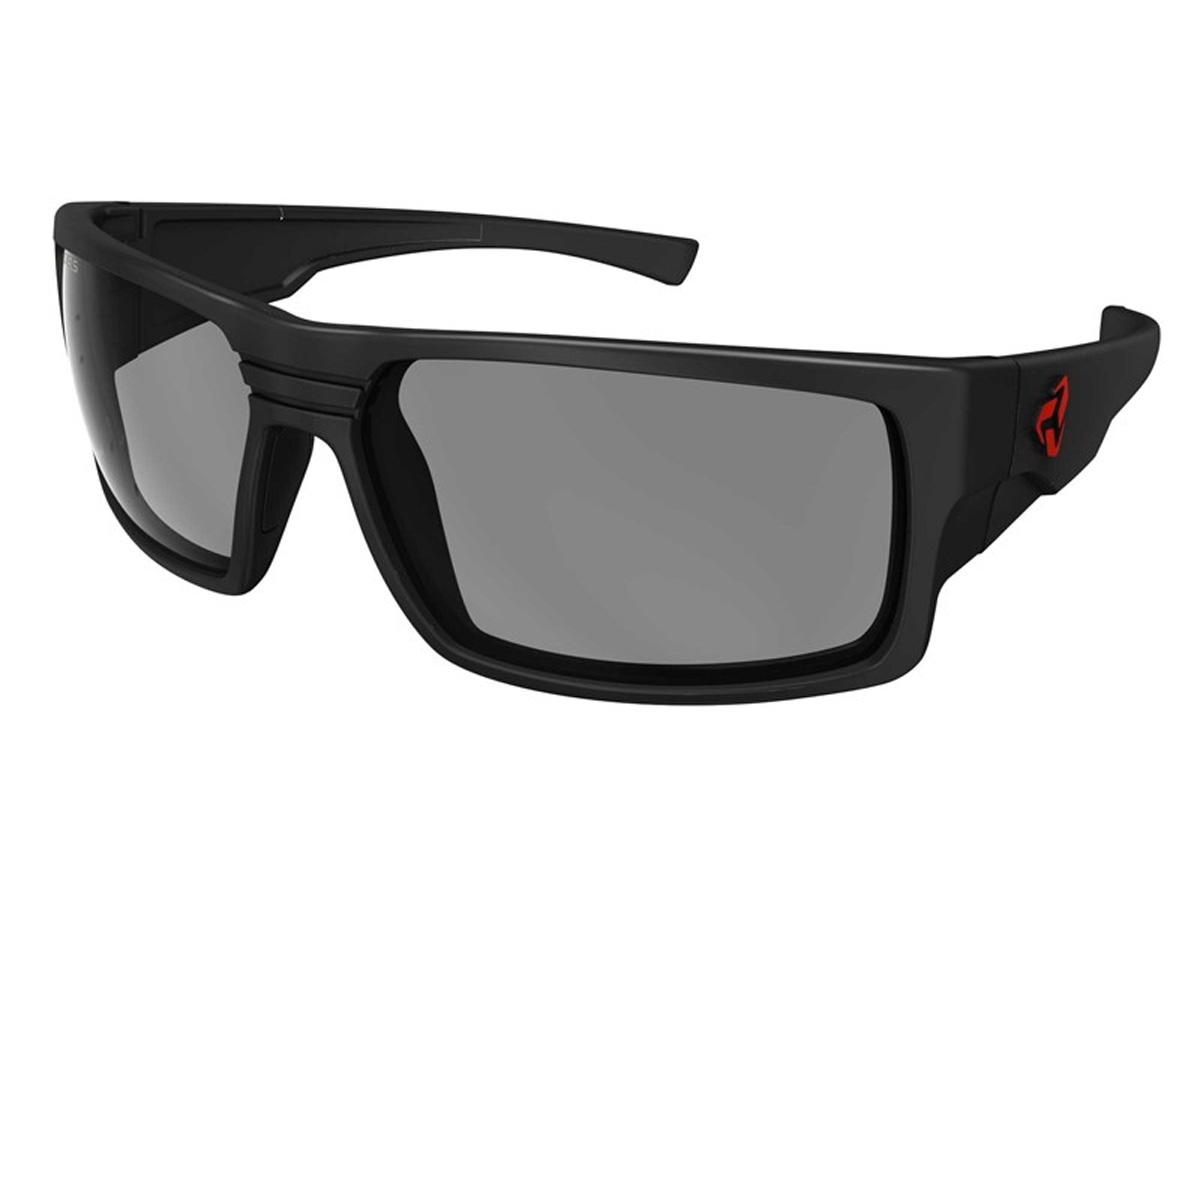 Ryders Eyewear Thorn Velo-Polar AntiFog Sunglasses (MATTE BLACK / DK GREY LENS ANTI-FOG) - image 1 of 1